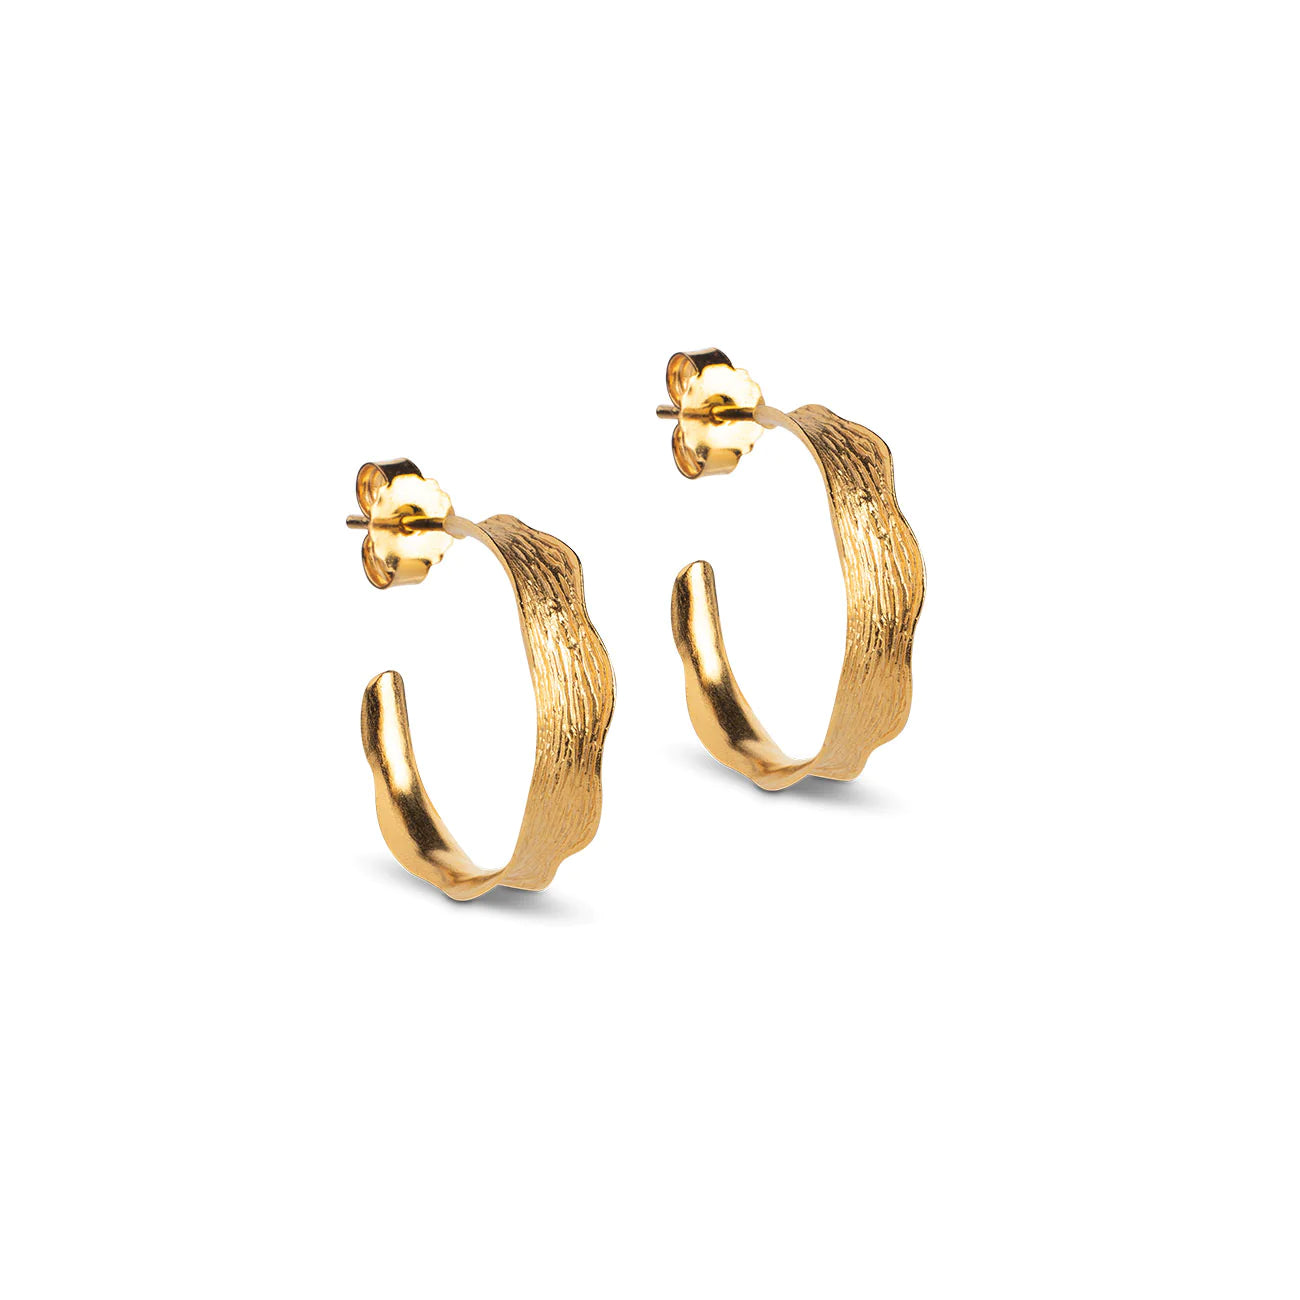 Textured Gold Hoop Small Earrings - Eloise